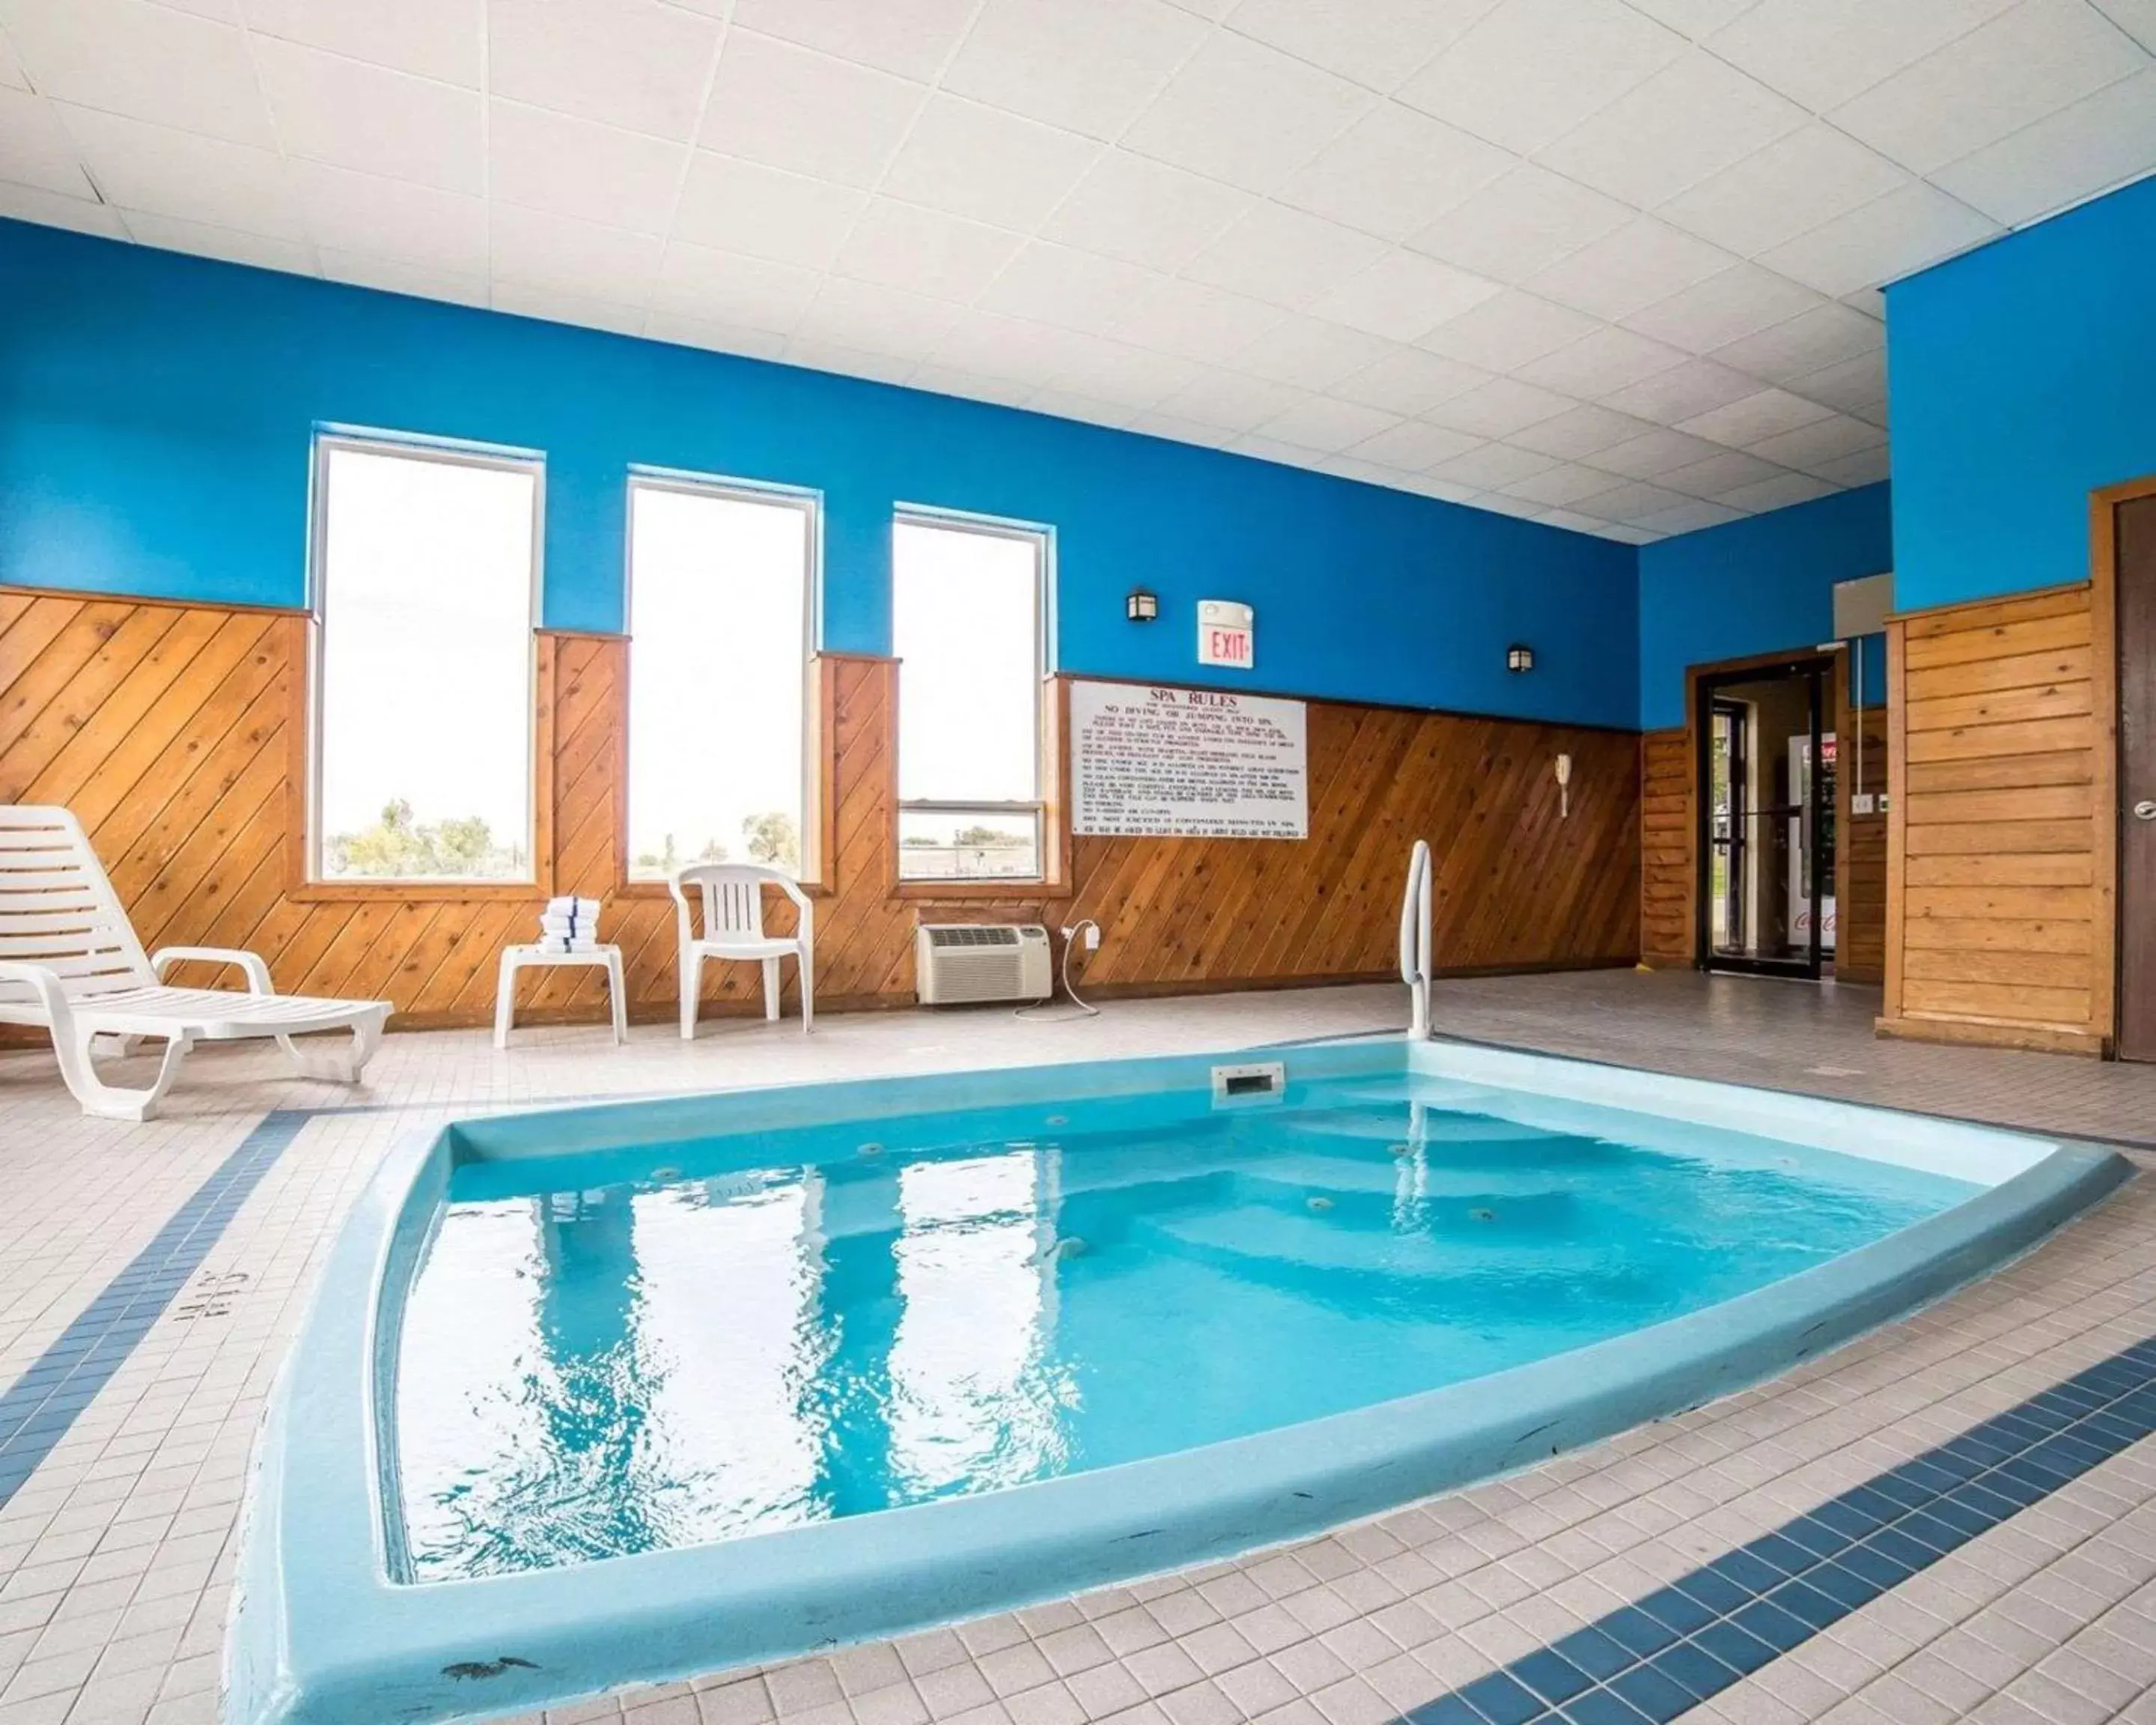 On site, Swimming Pool in Quality Inn Sheridan